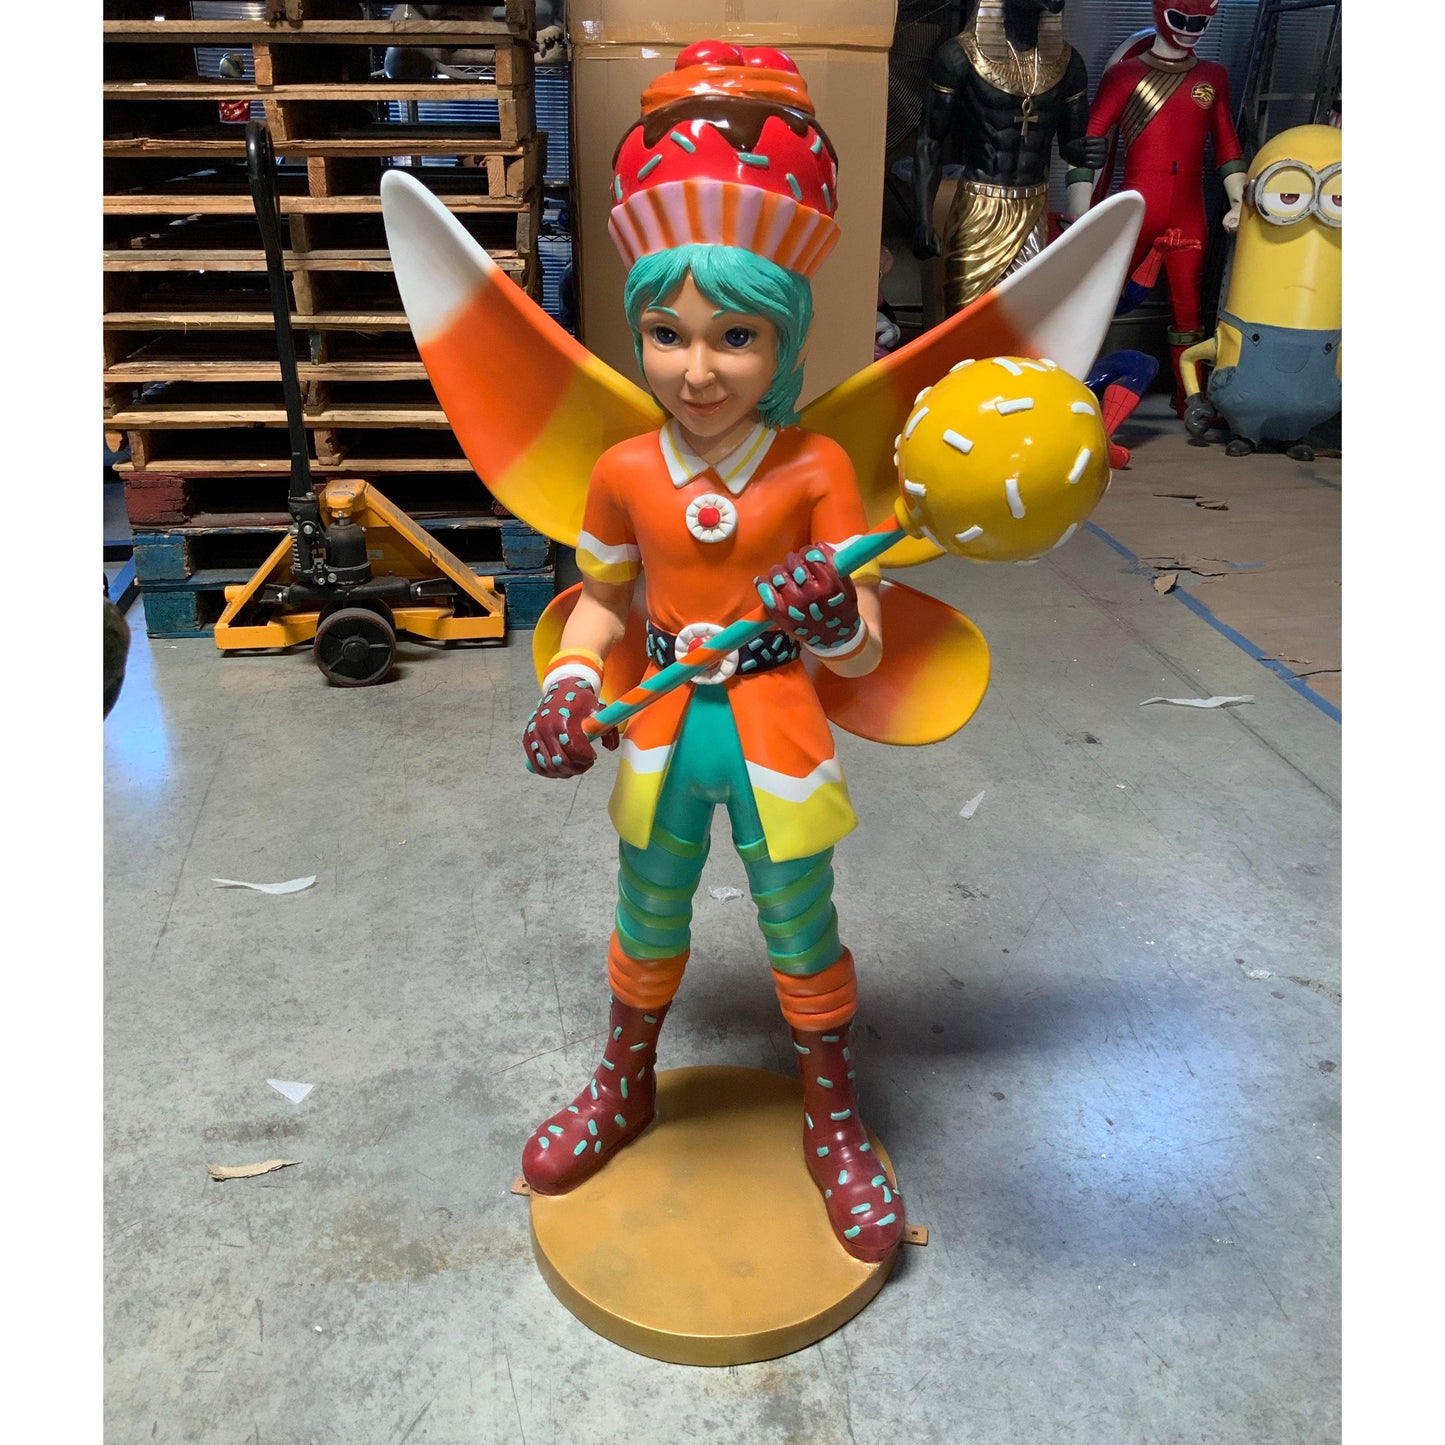 Boy Candy Fairy Statue